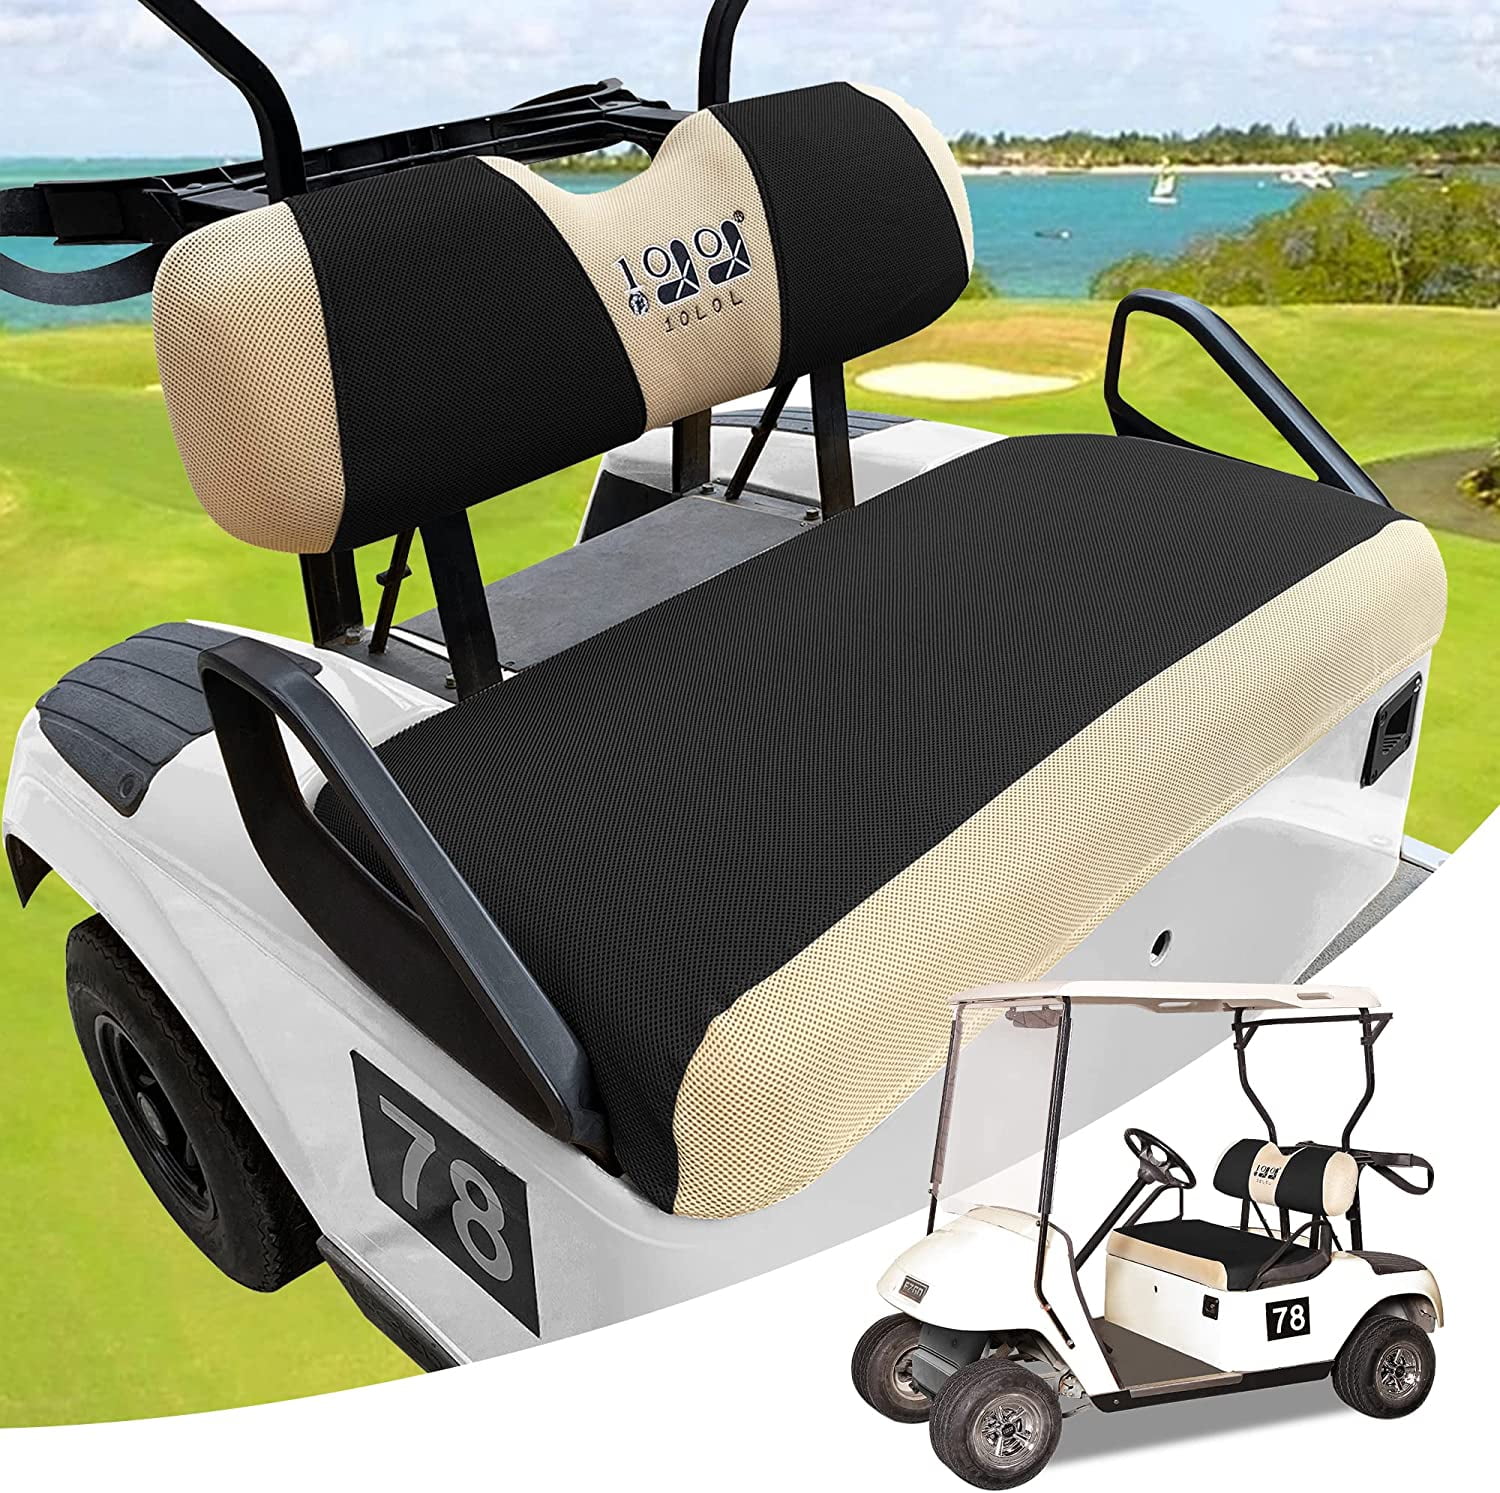 10L0L Golf Cart Rear Seat Cover for EZGO TXT RXV Club Car DS